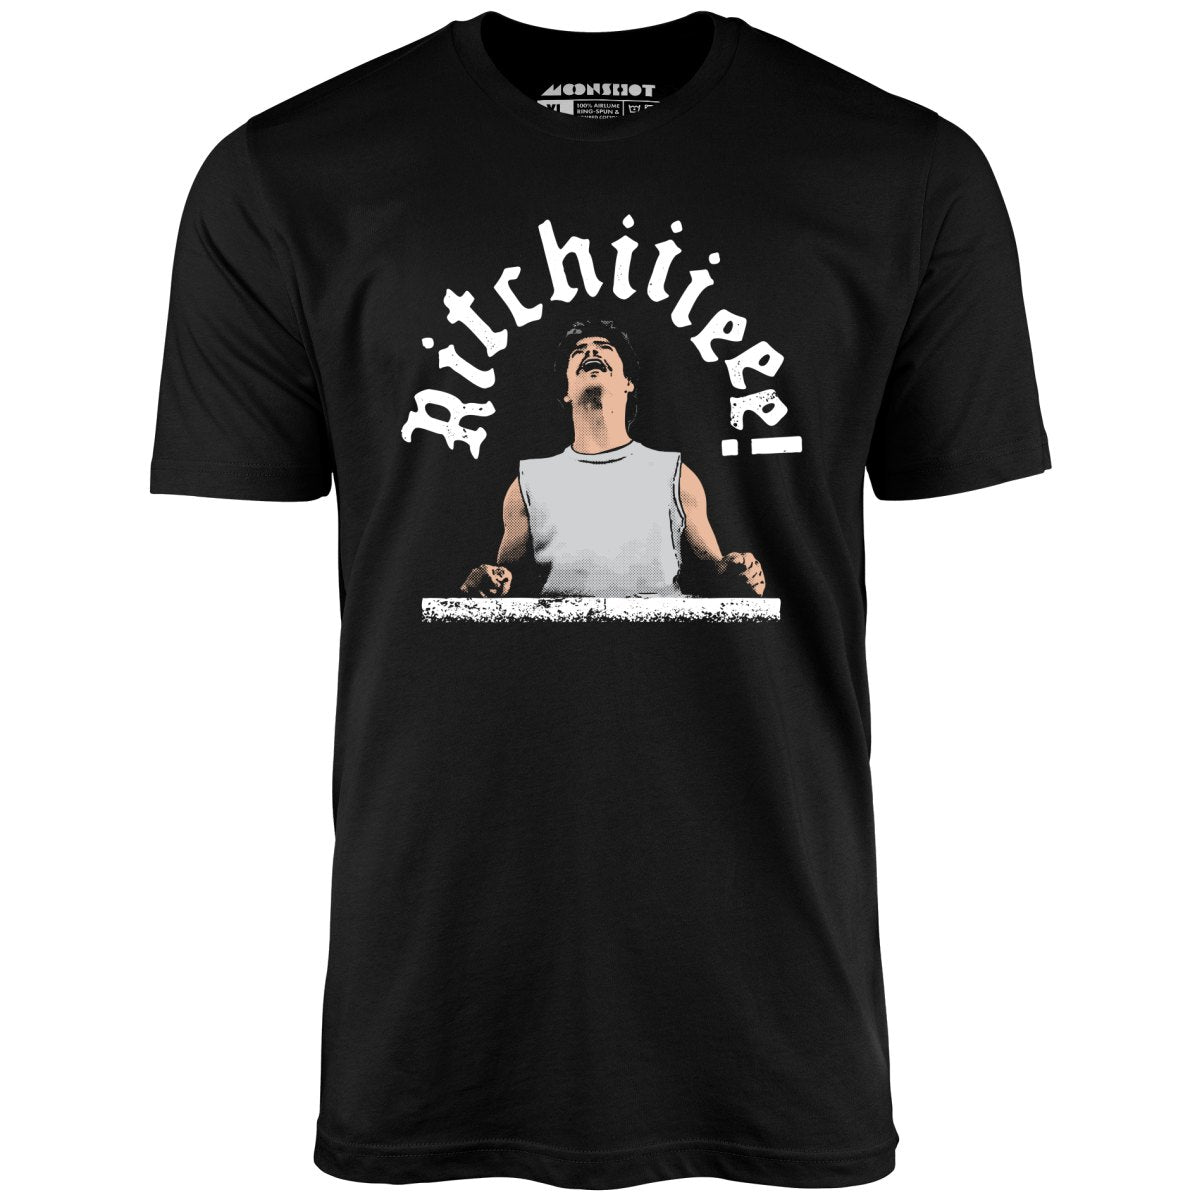 Ritchiiieee! - Unisex T-Shirt